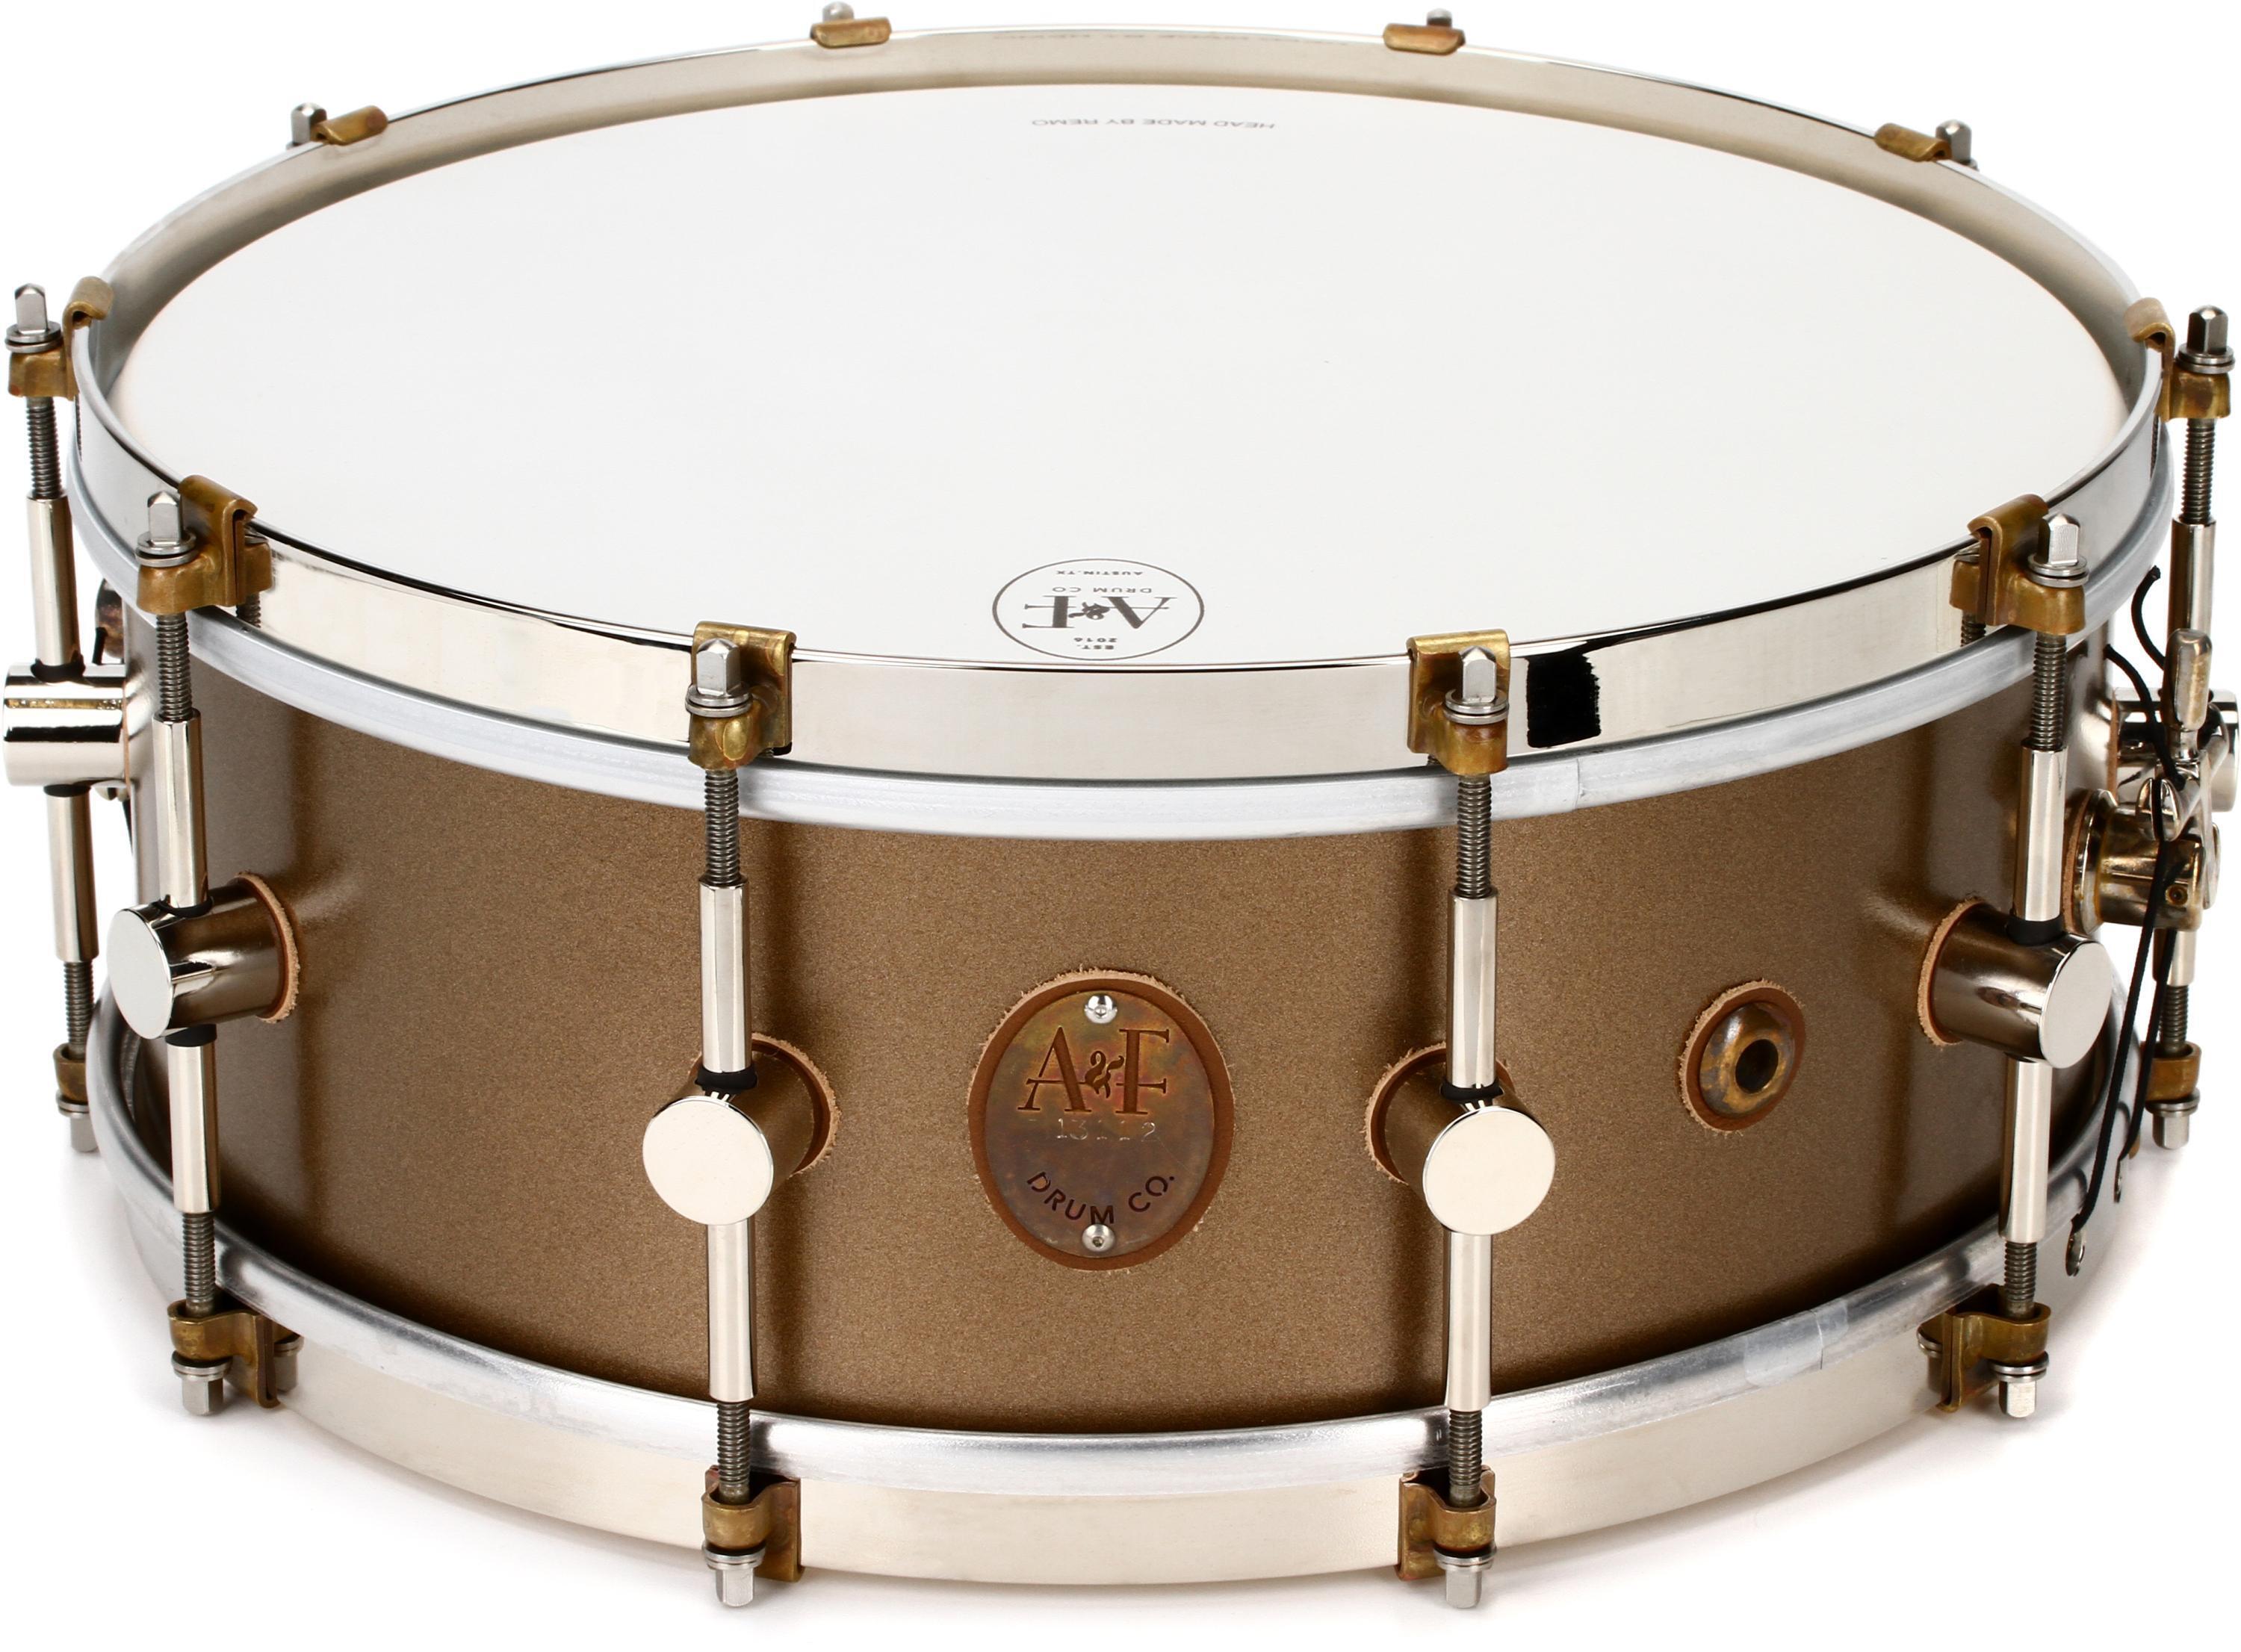 A&F Drum Company Maple Club Snare Drum - 5.5 x 14 inch - Deco Gold